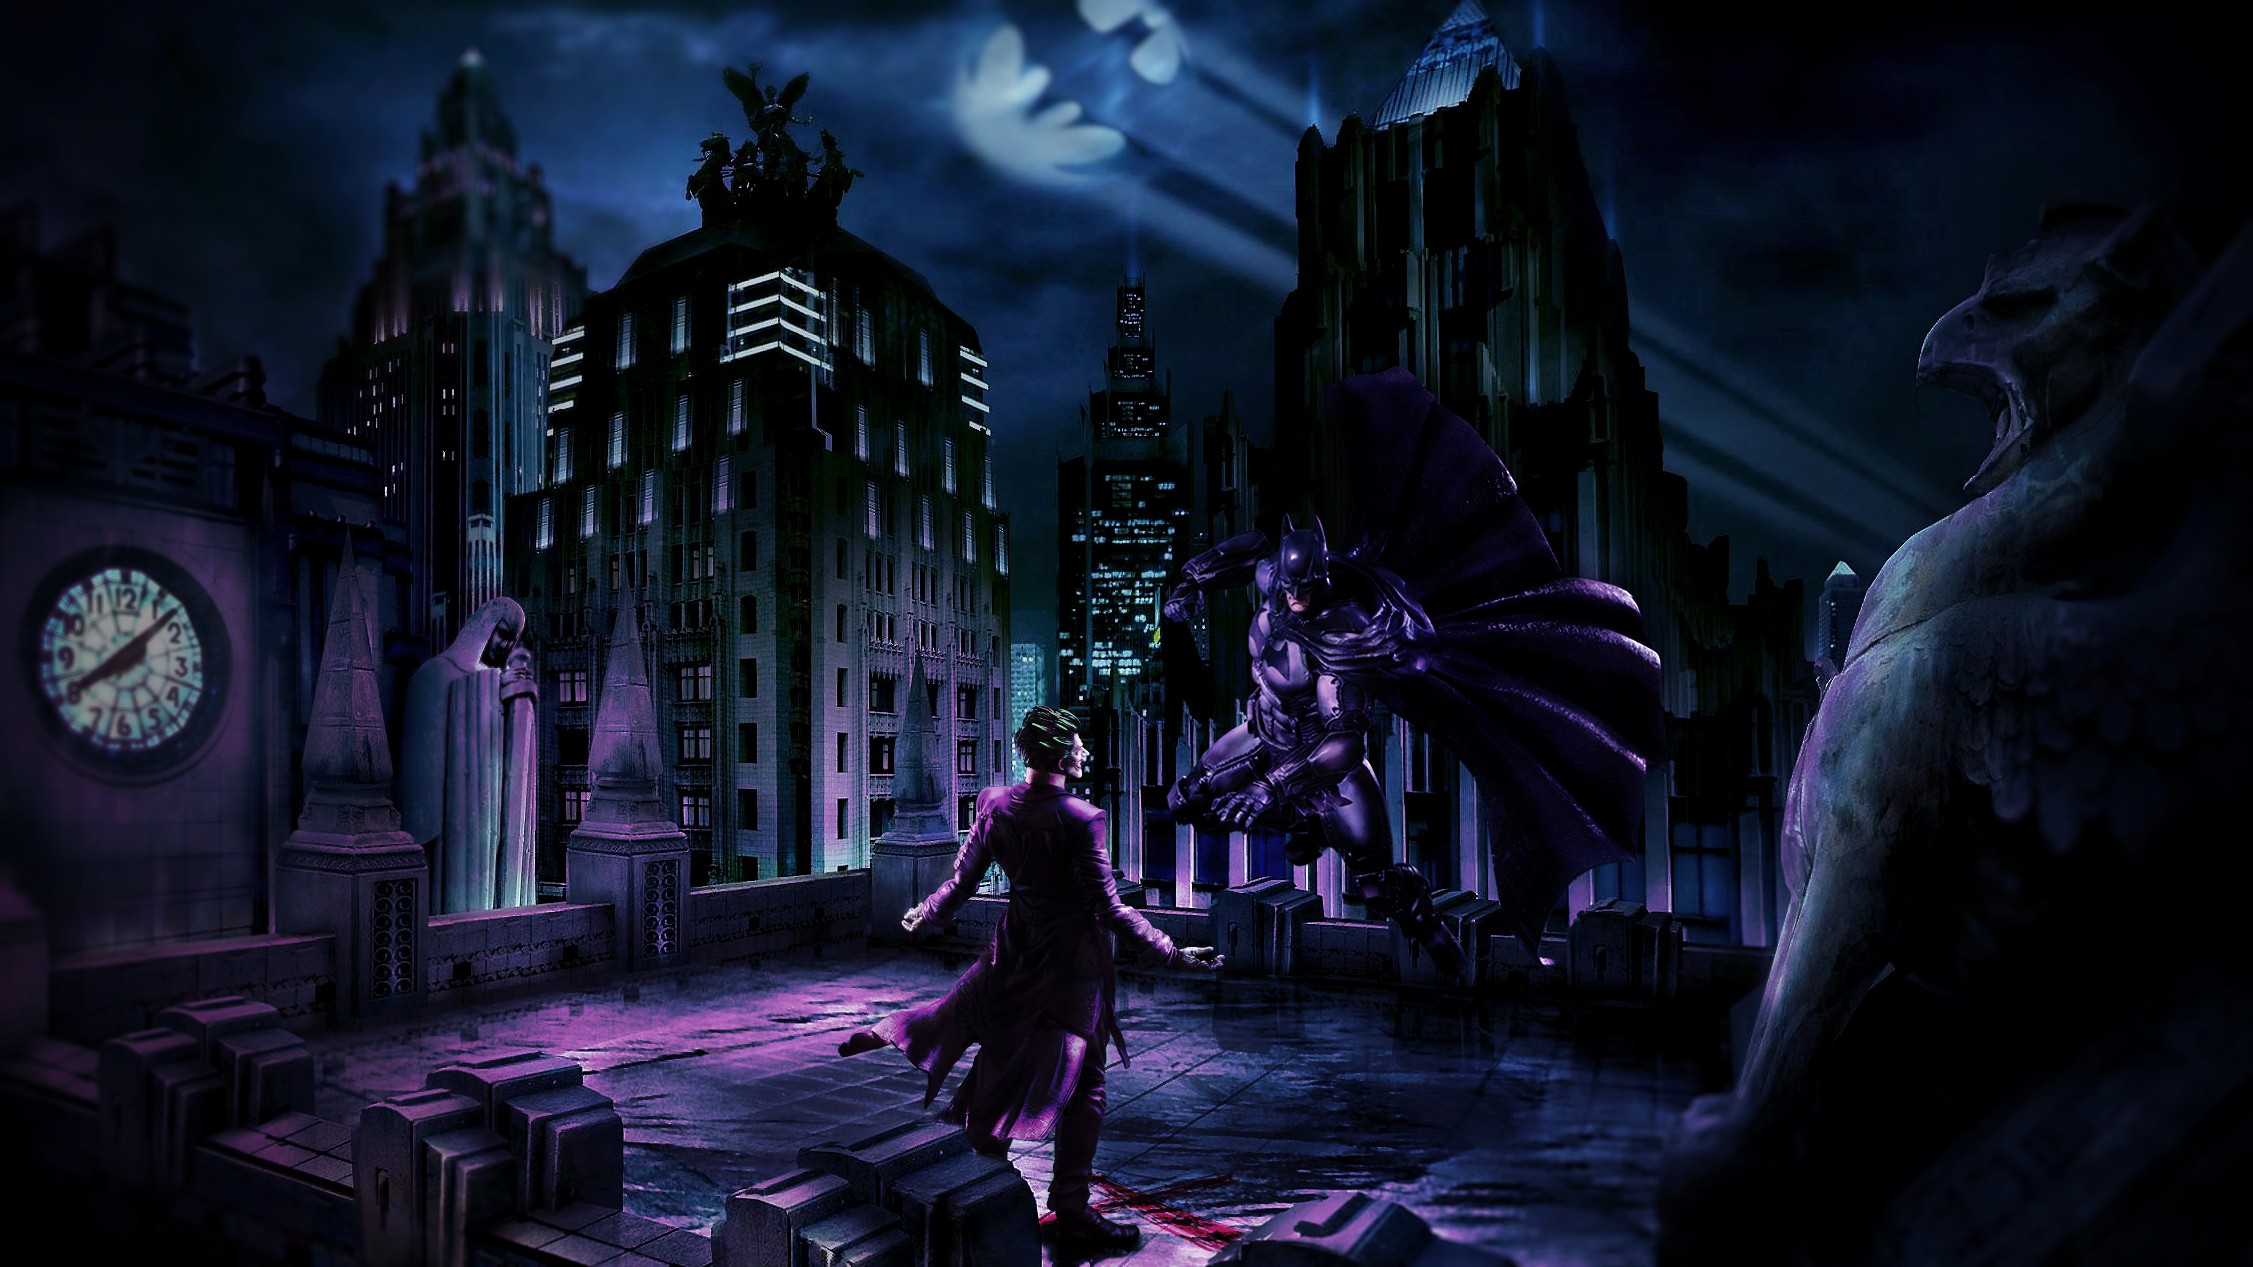 General 2253x1267 Batman Joker photoshopped comic art Gotham City clocks hero villains